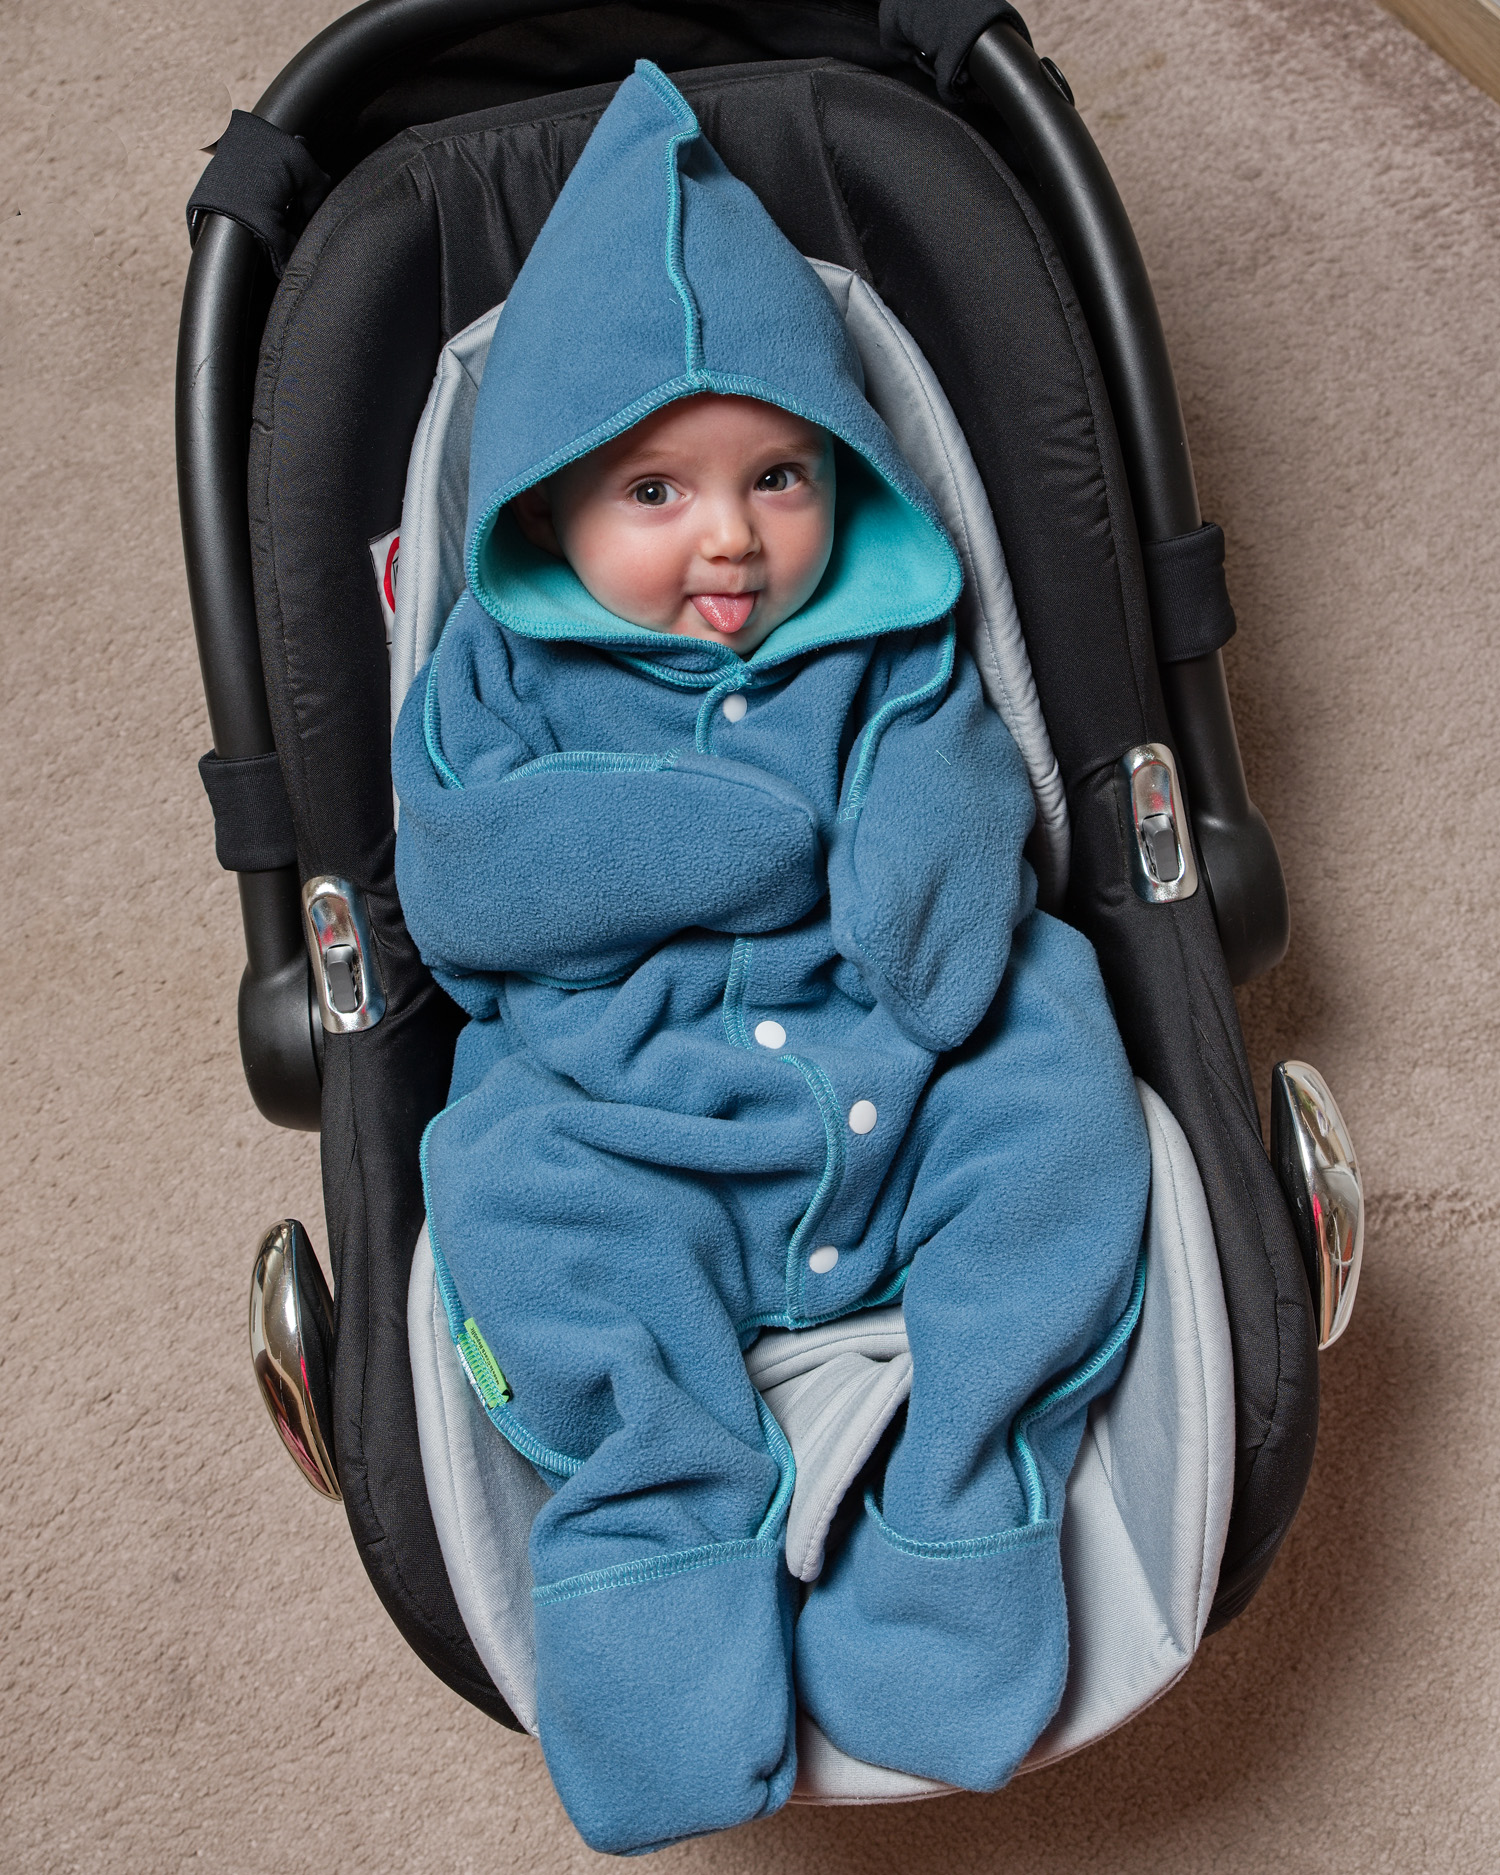 Fleece pramsuit for babies M, L (sizes 62-92), beige